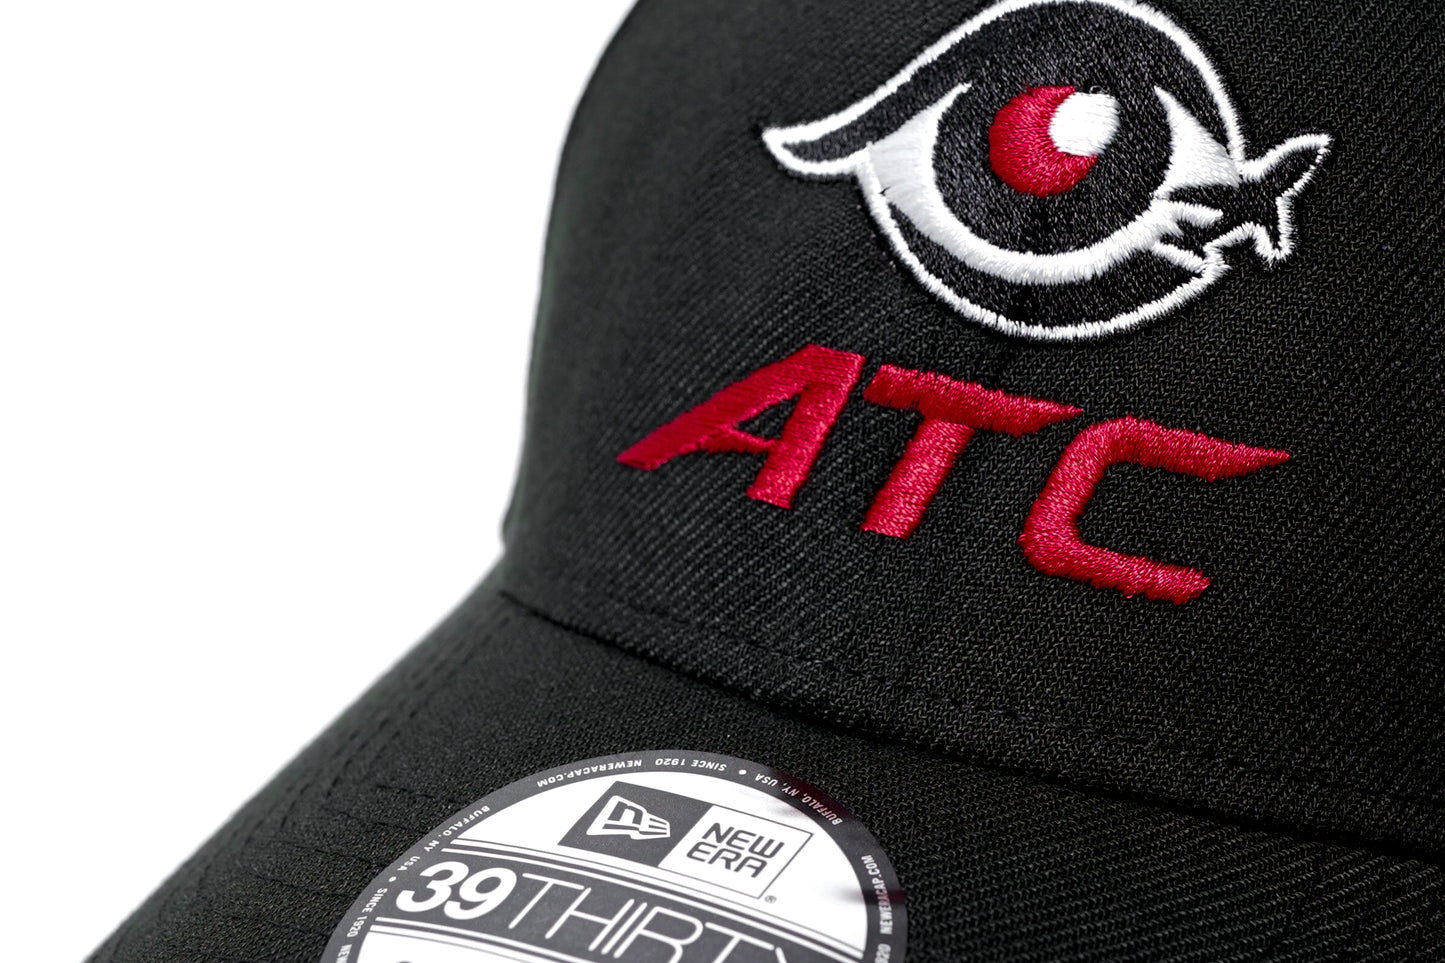 ATC (001) Black Hat